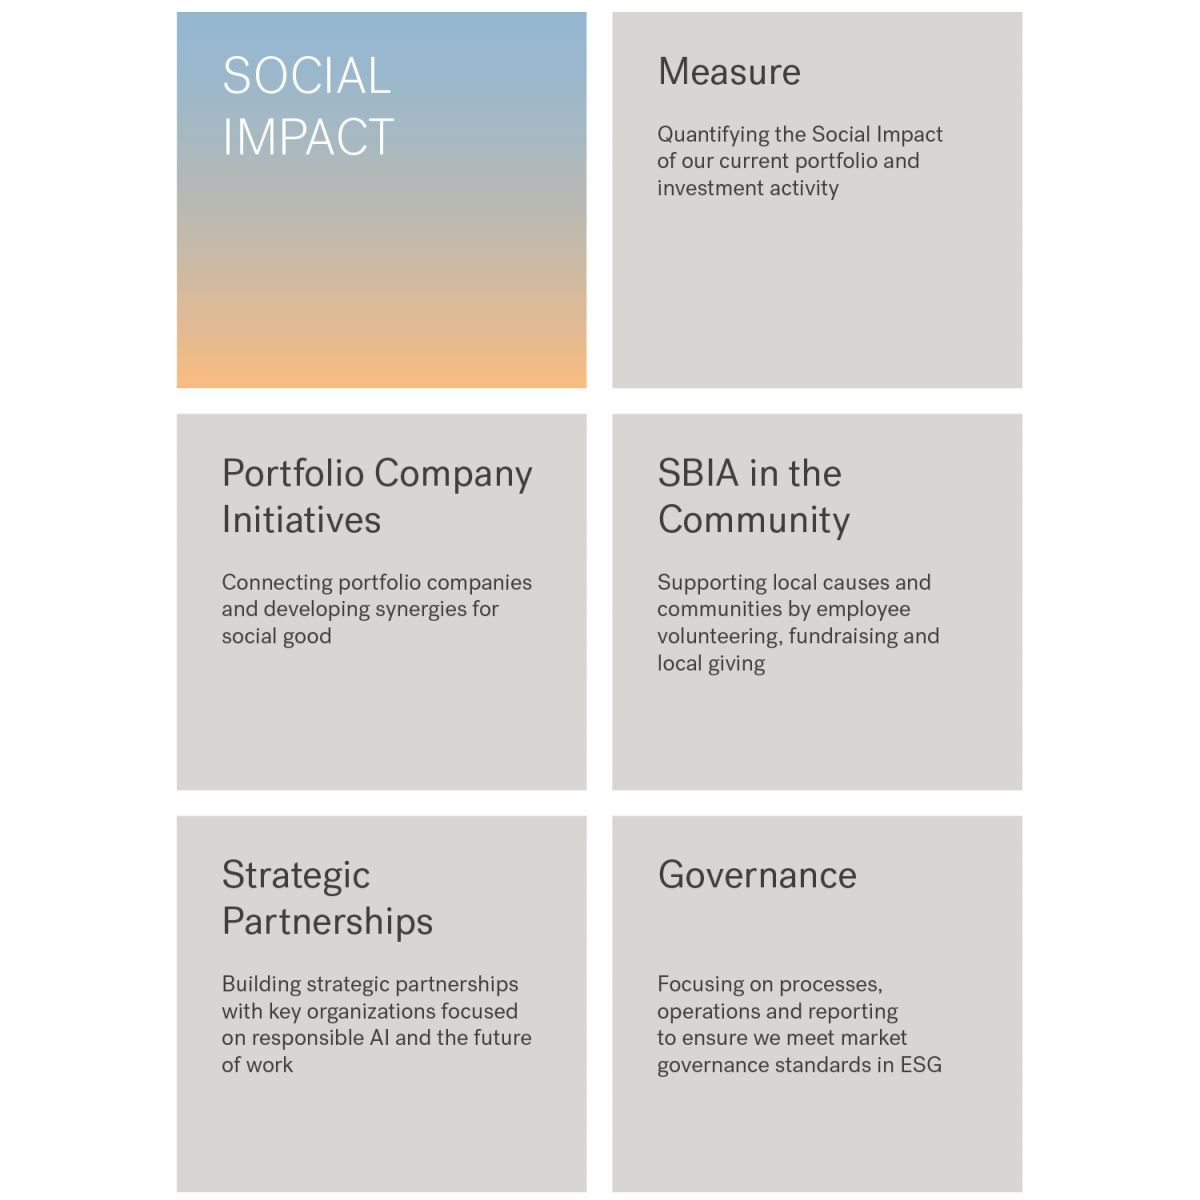 Social Impact Categories: Measure, Portfolio Company Initiatives, SBIA in the Community, Strategic Partnerships, Governance.